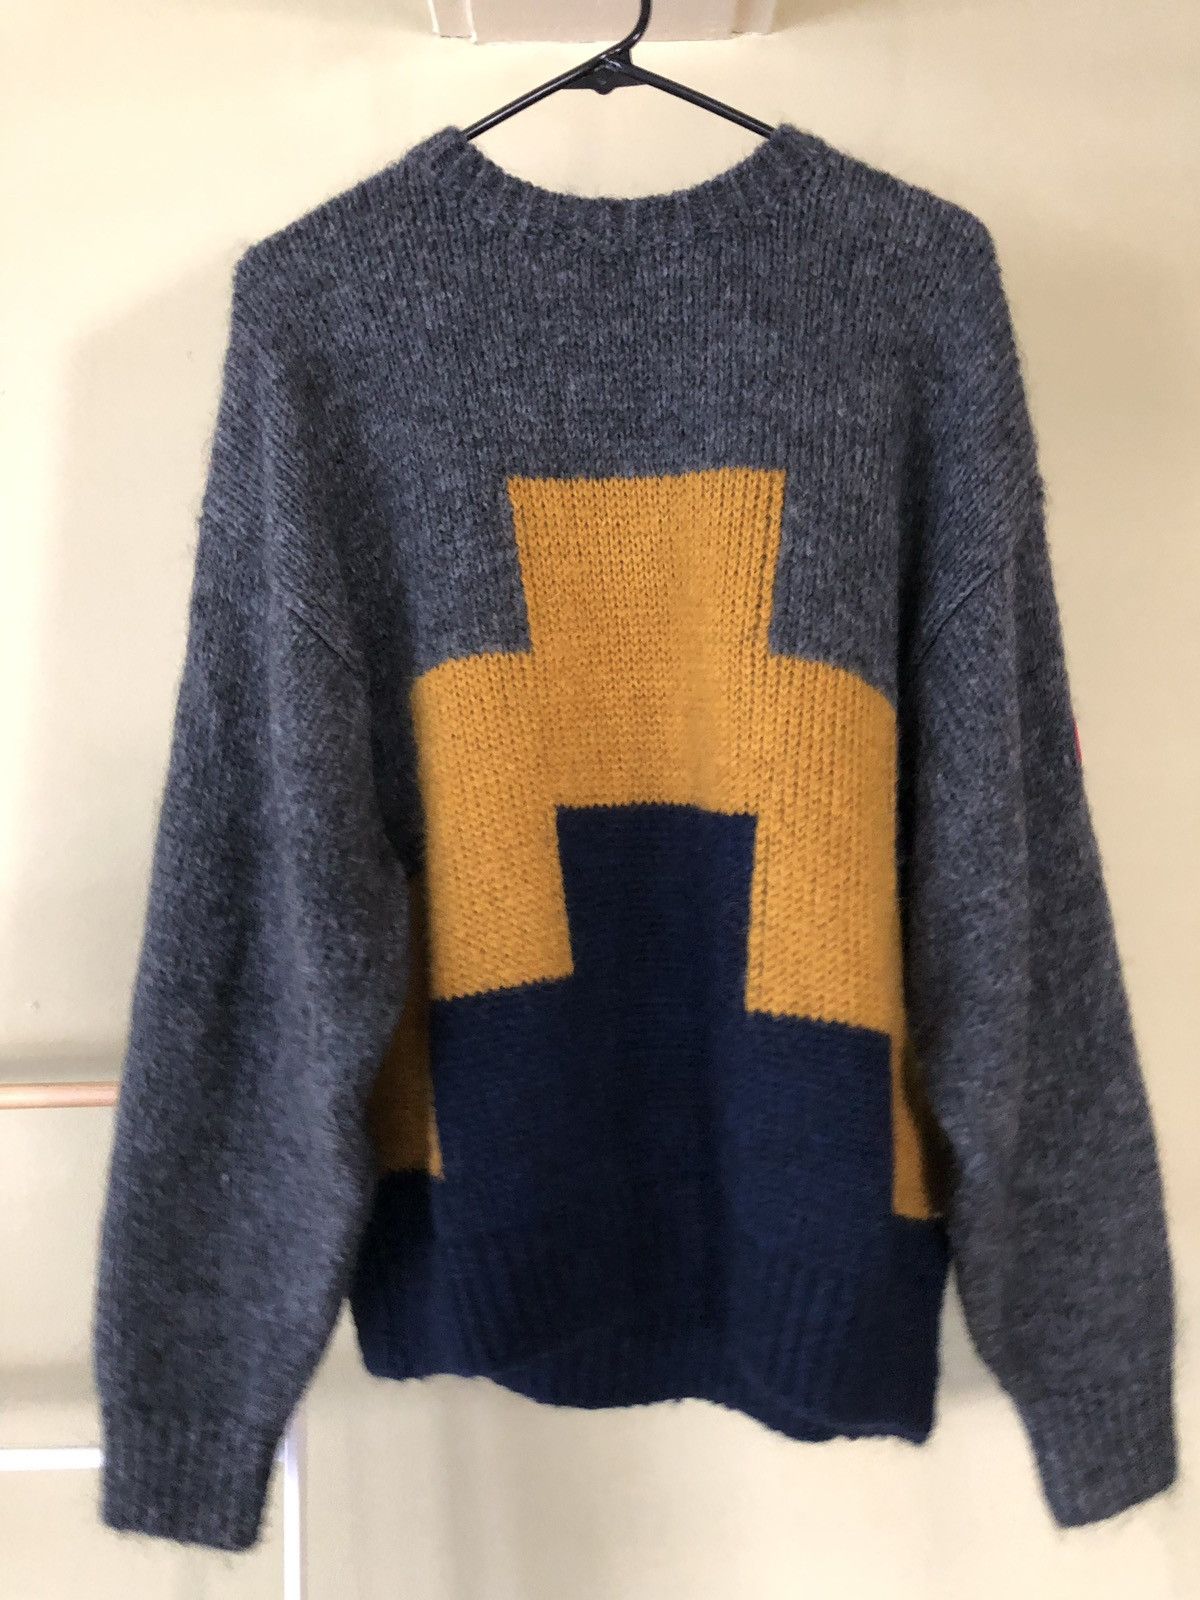 Cav Empt Ziggurat knit sweater | Grailed